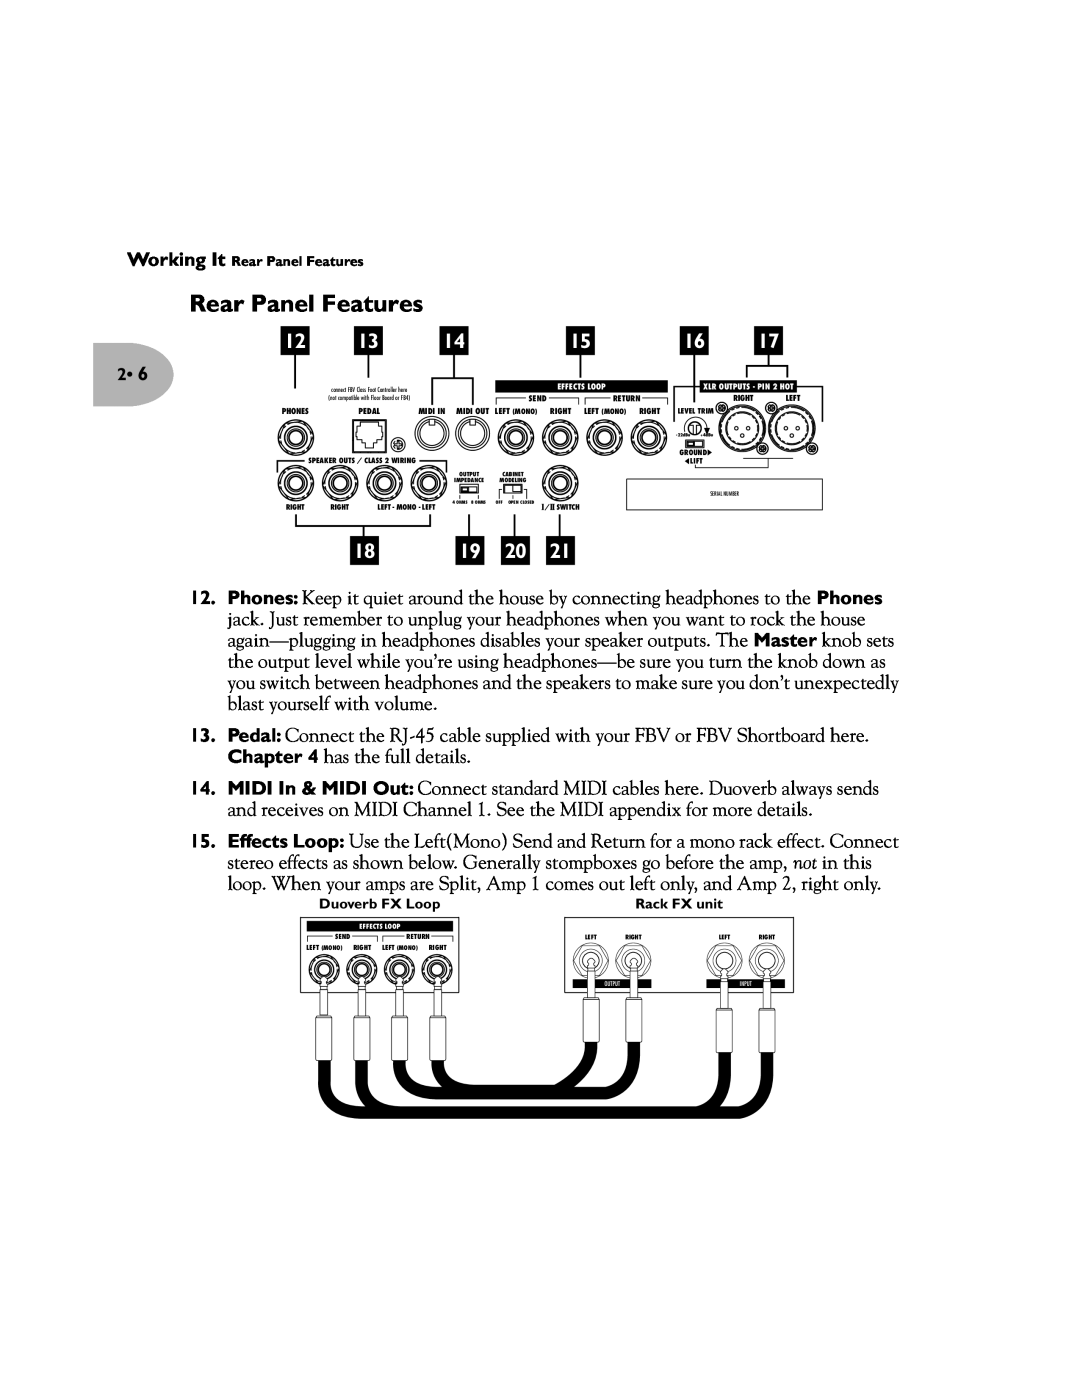 Line 6 Pilot's Handbook manual 18 19 20, Working It Rear Panel Features, Duoverb FX Loop, Rack FX unit 